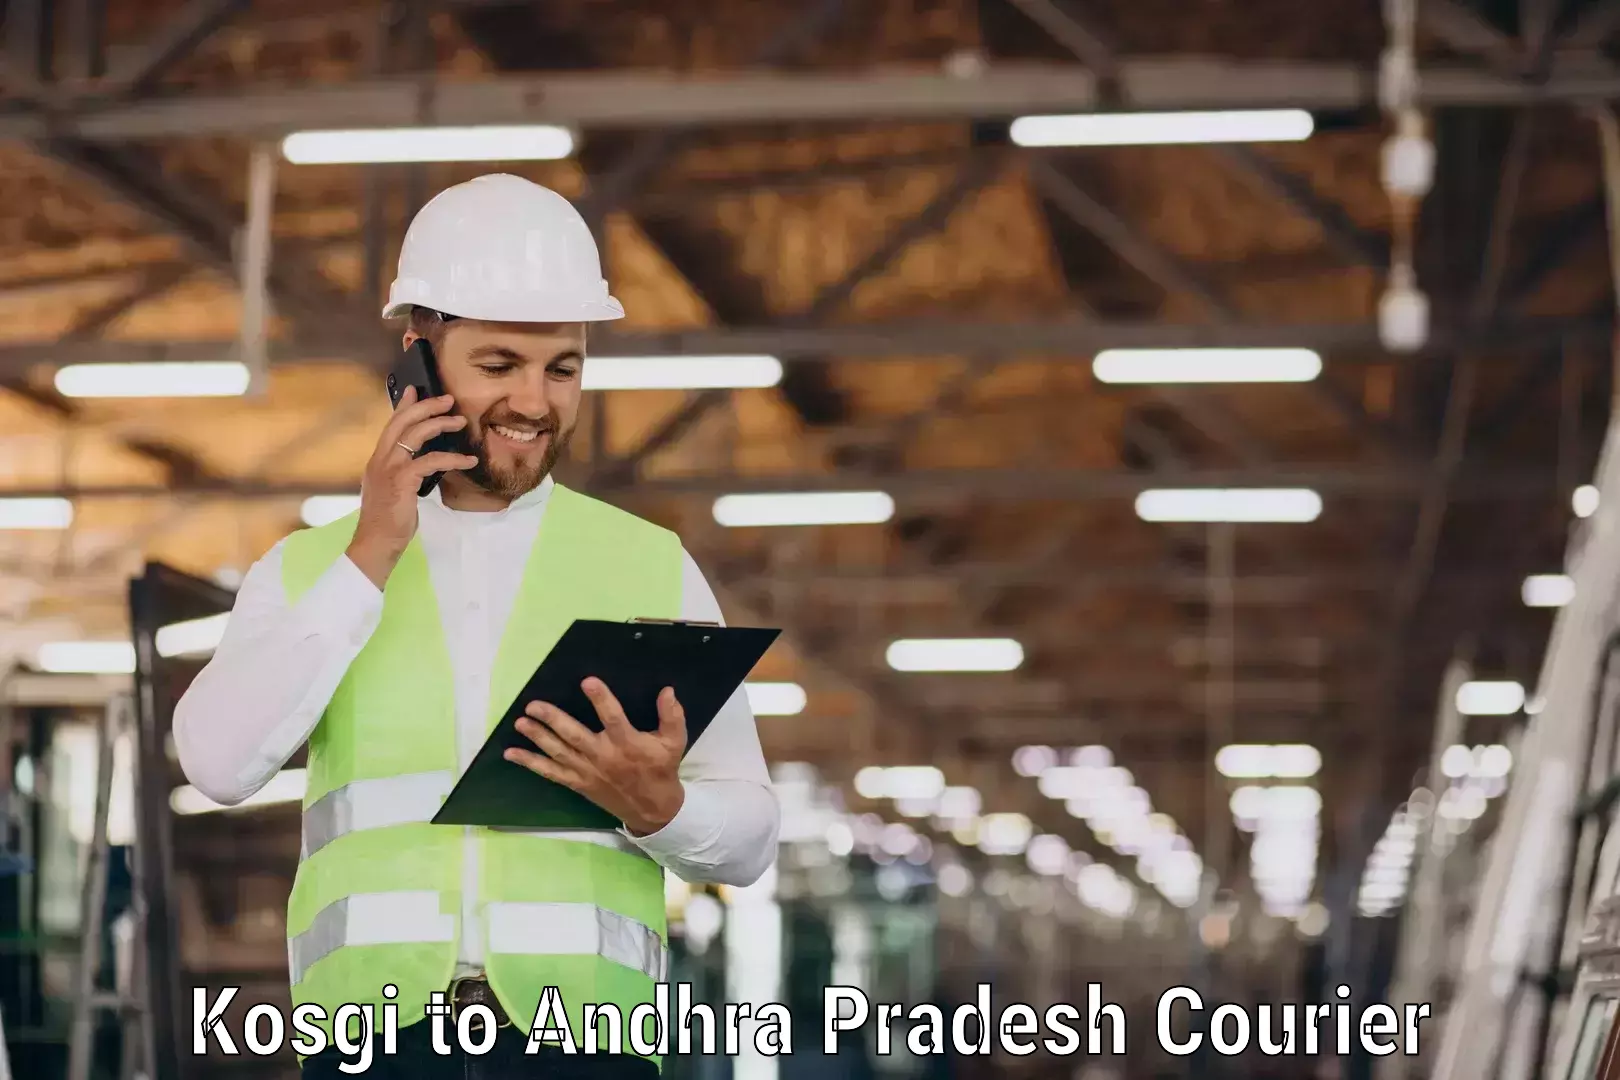 Reliable logistics providers Kosgi to Andhra Pradesh